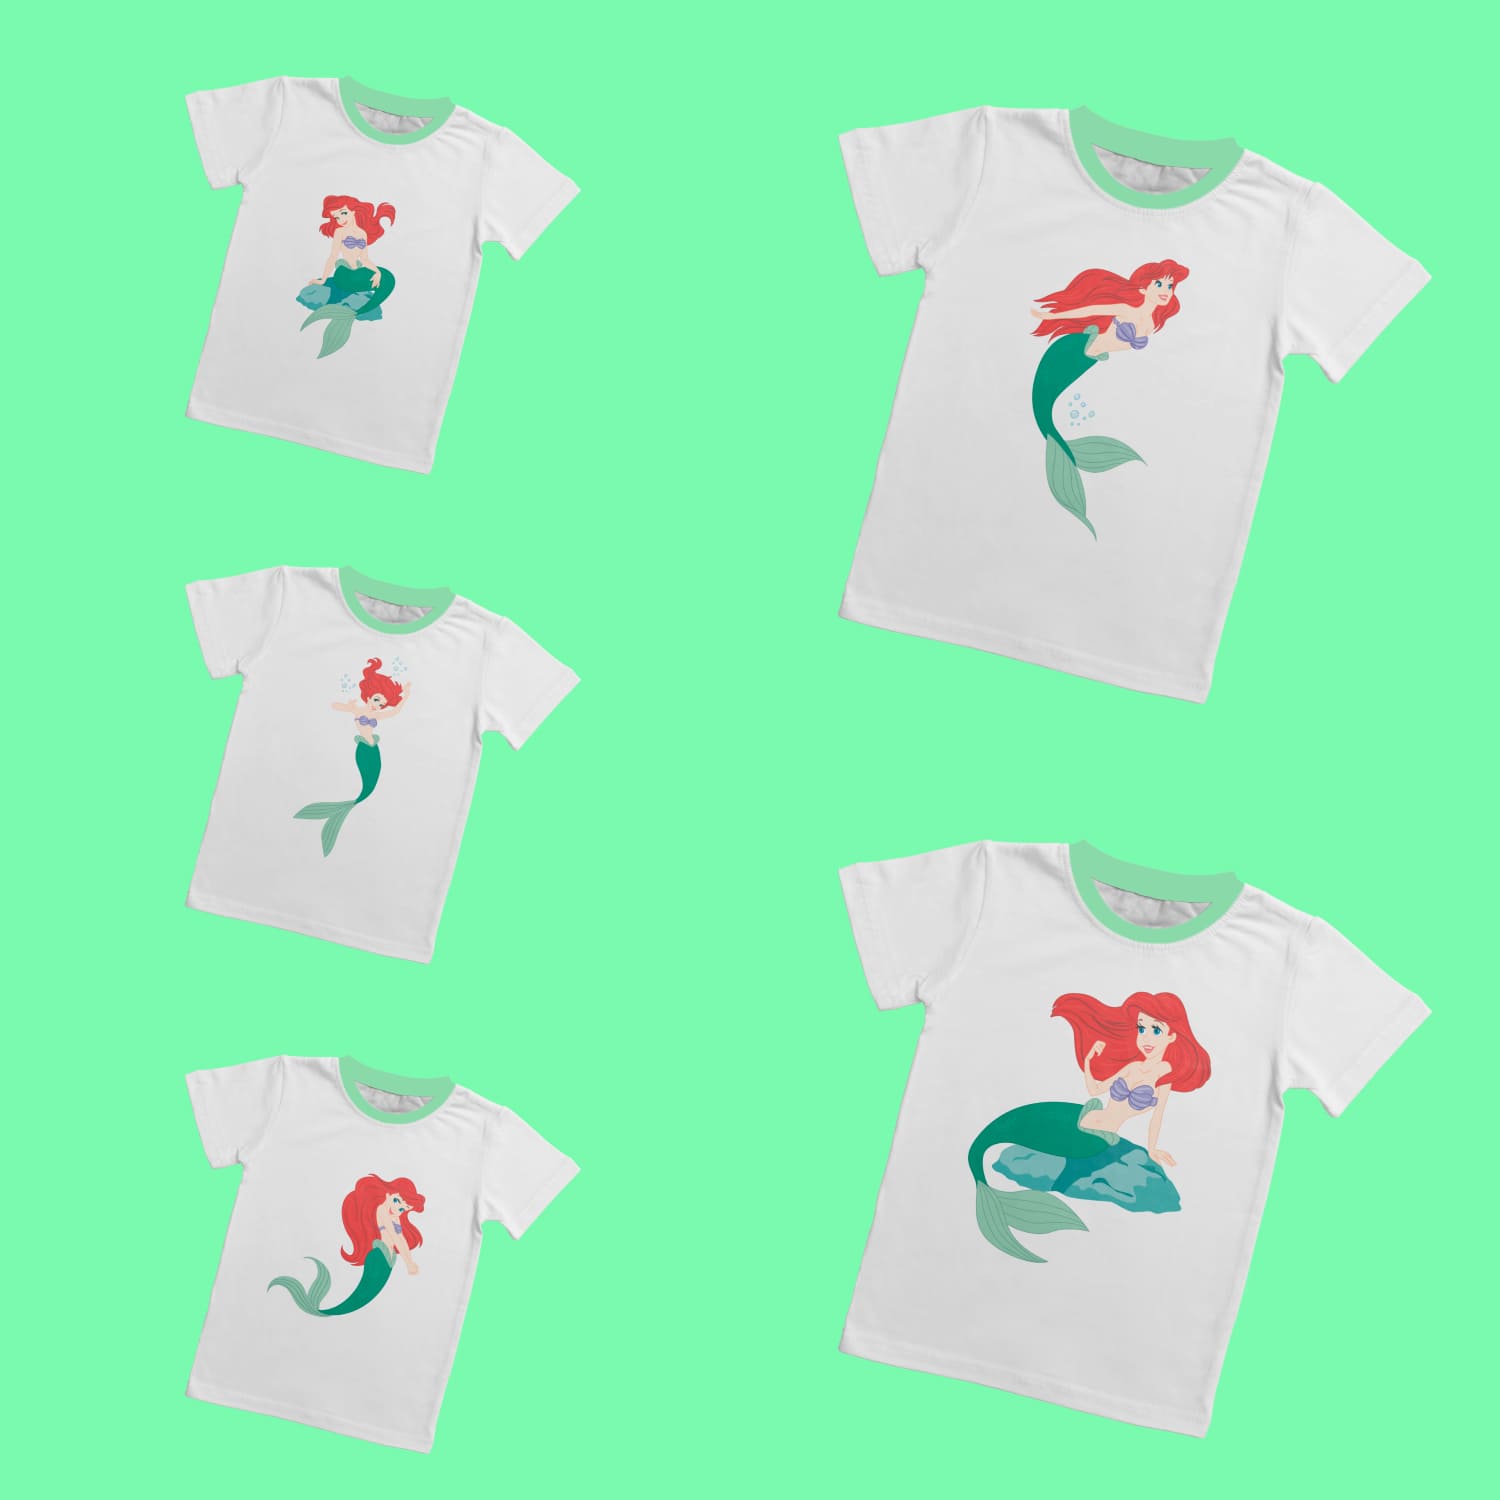 Illustration ariel mermaid on t-shirt.